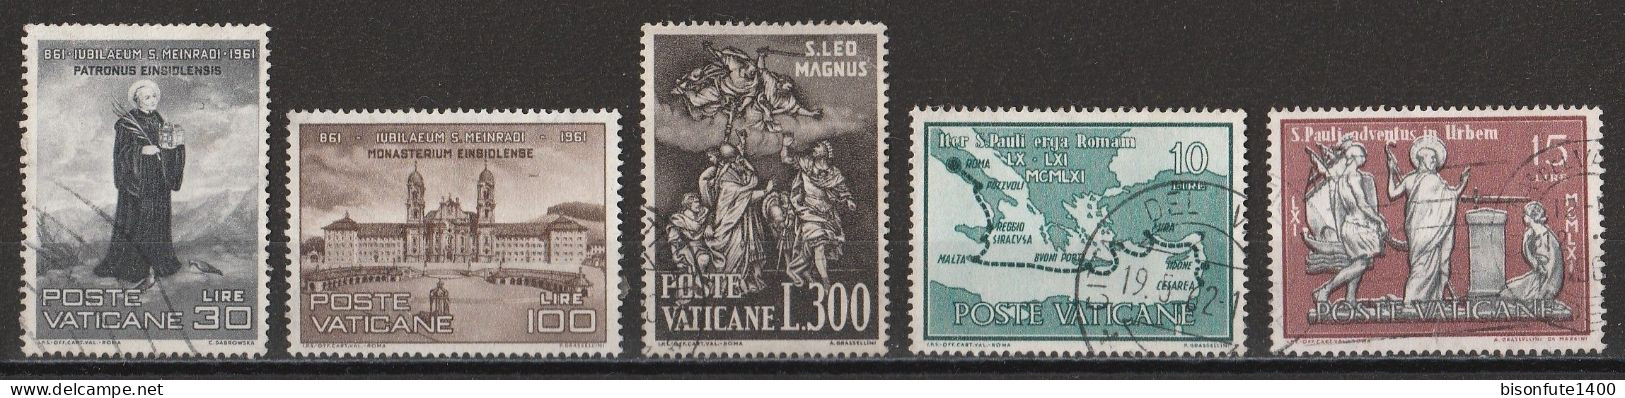 Vatican 1961 : Timbres Yvert & Tellier N° 316 - 317 - 321 - 322 - 323 - 329 - 331 - 332 - 336 Et 343 Oblitérés. - Usados